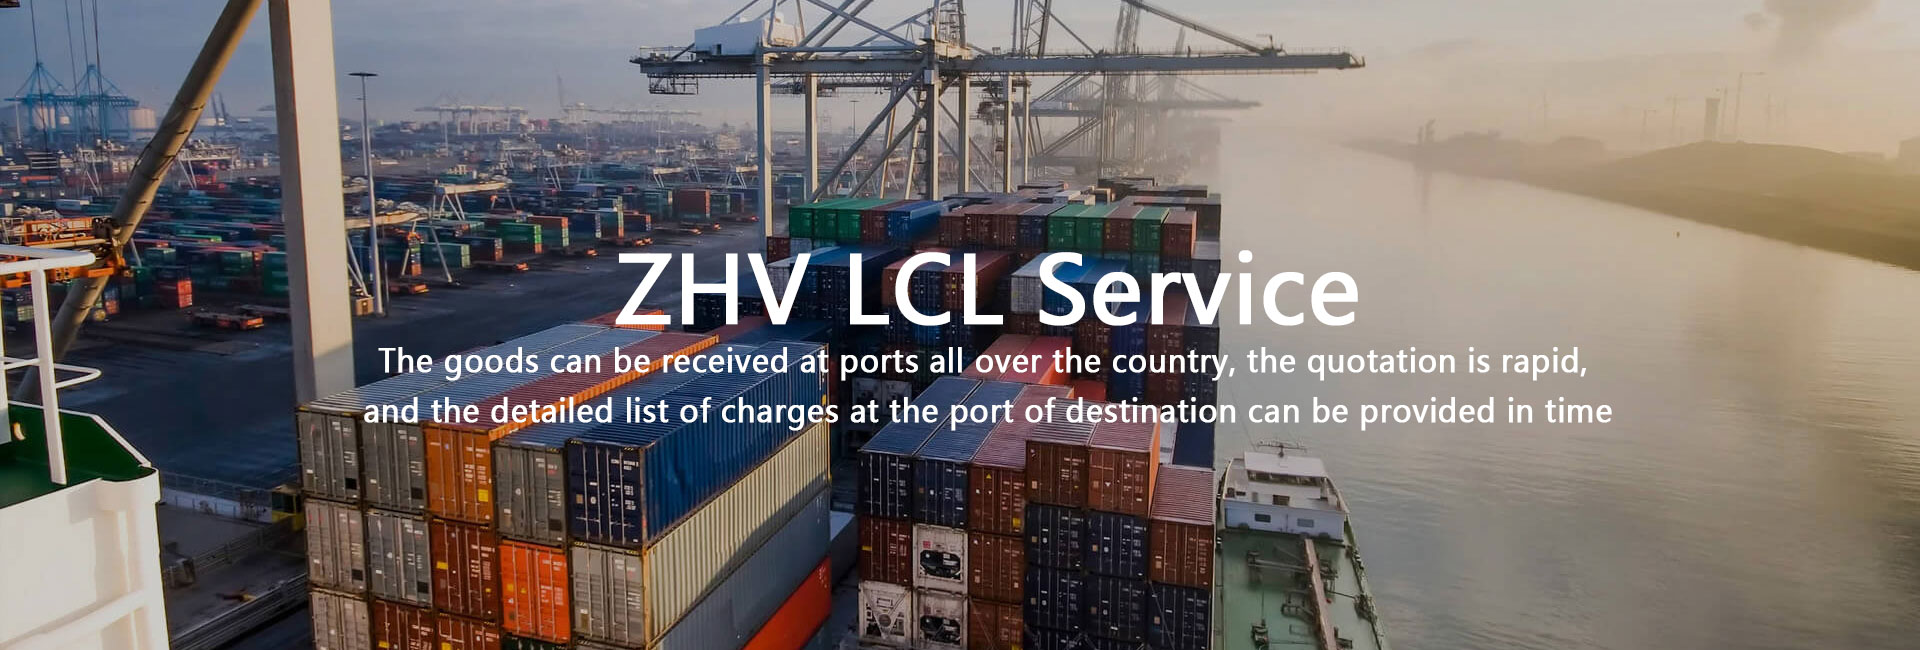 zhv International Logistics